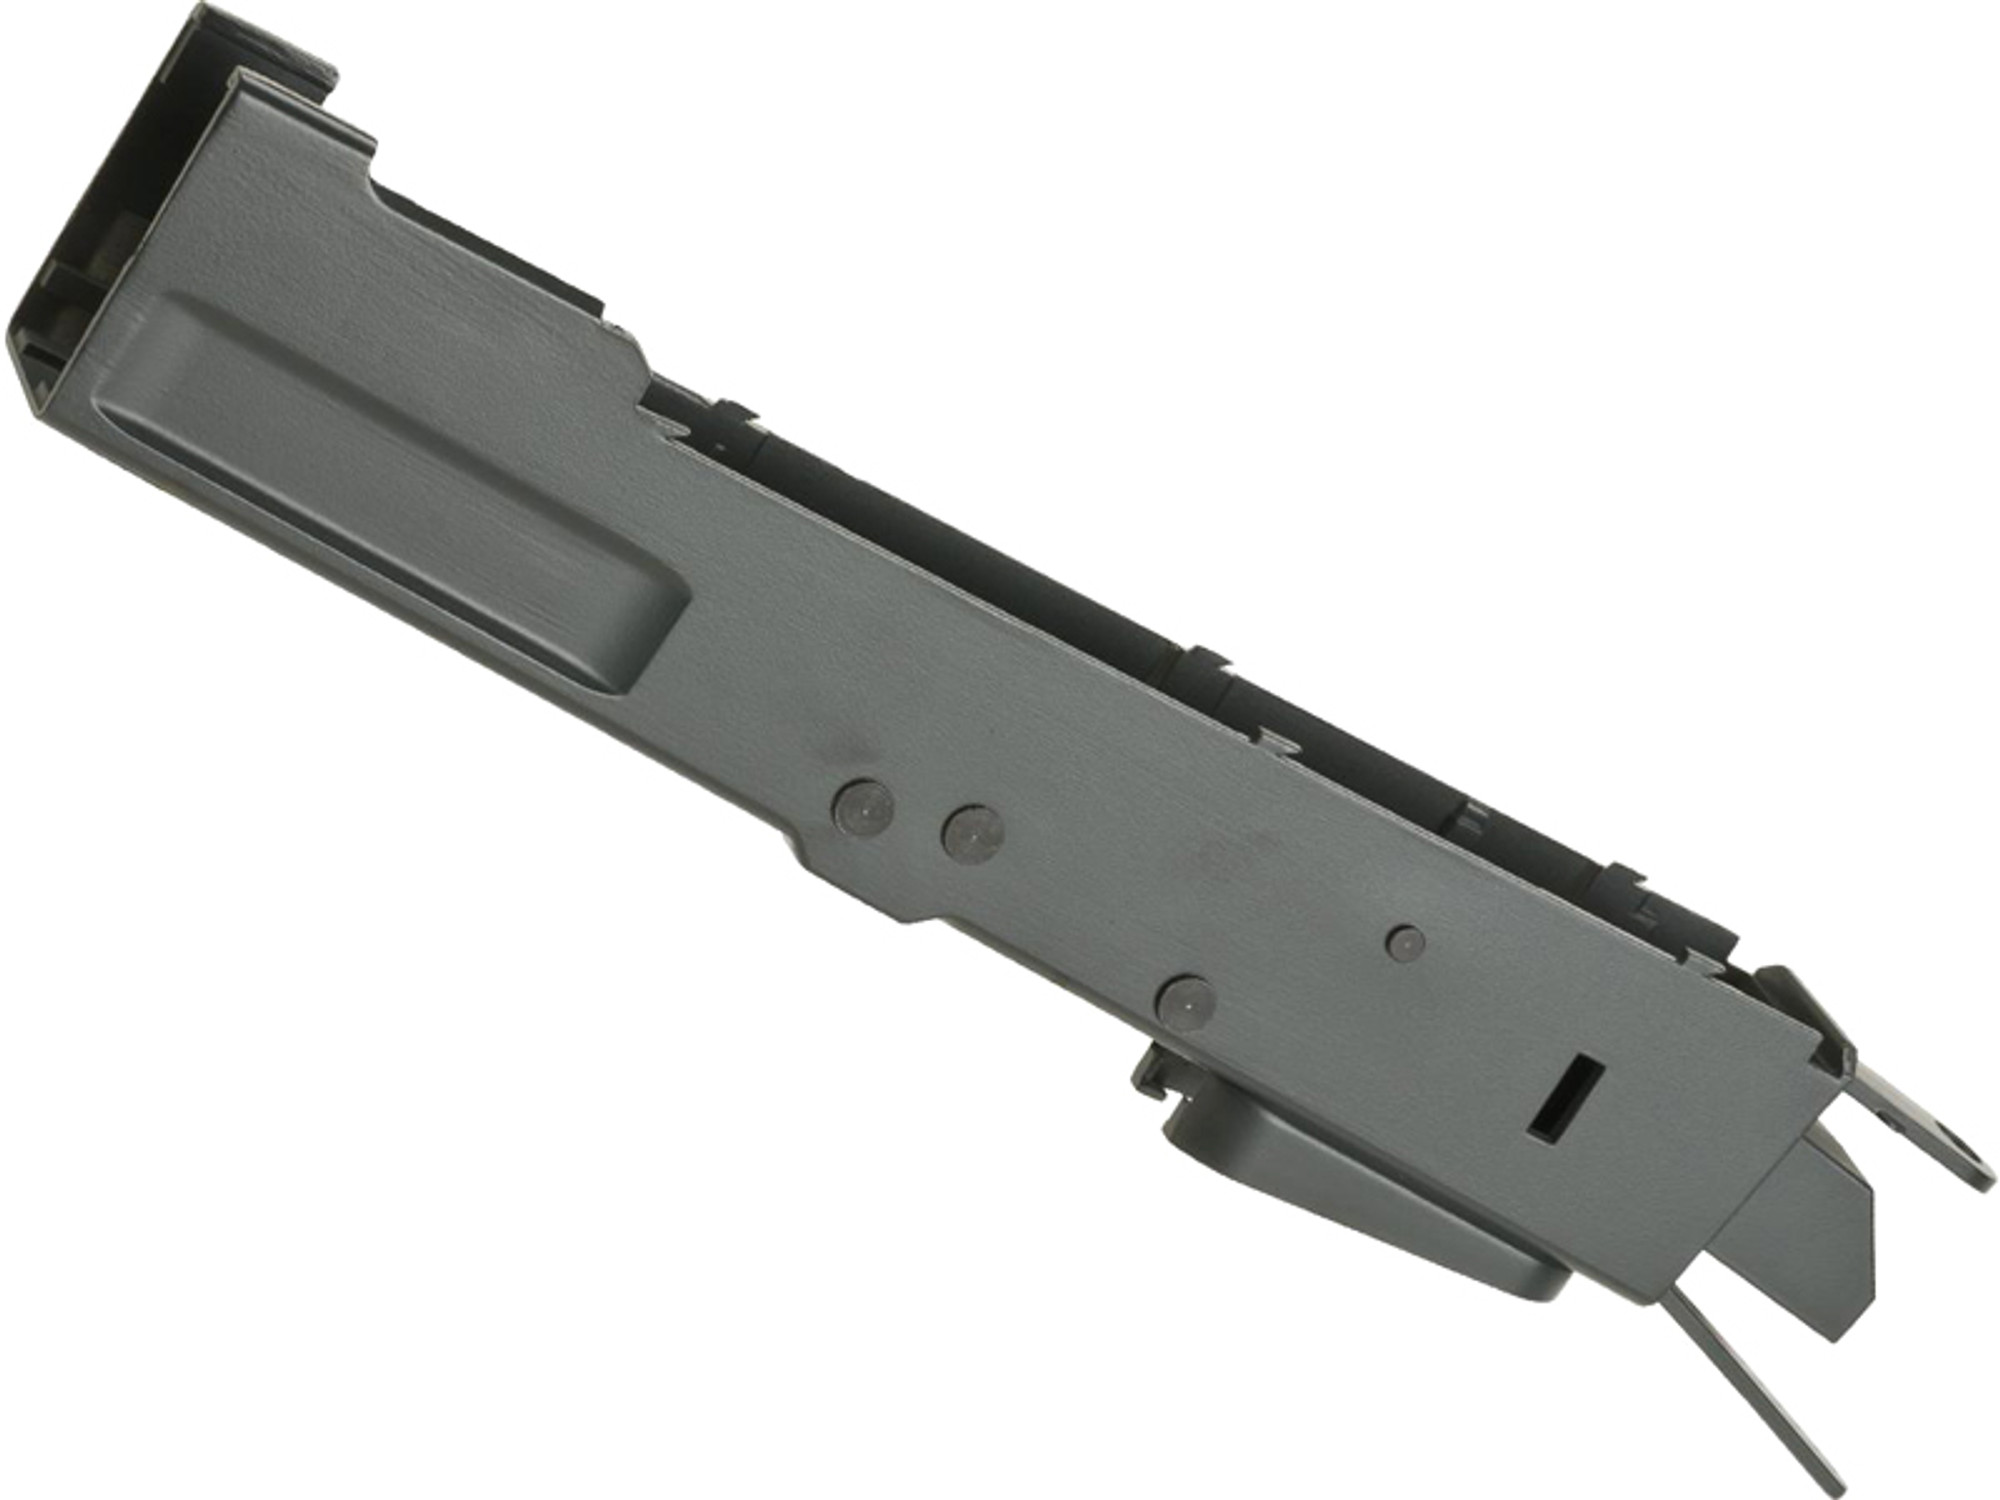 Full Metal Receiver for AK47 series Airsoft AEG (Fixed / Full Stock)